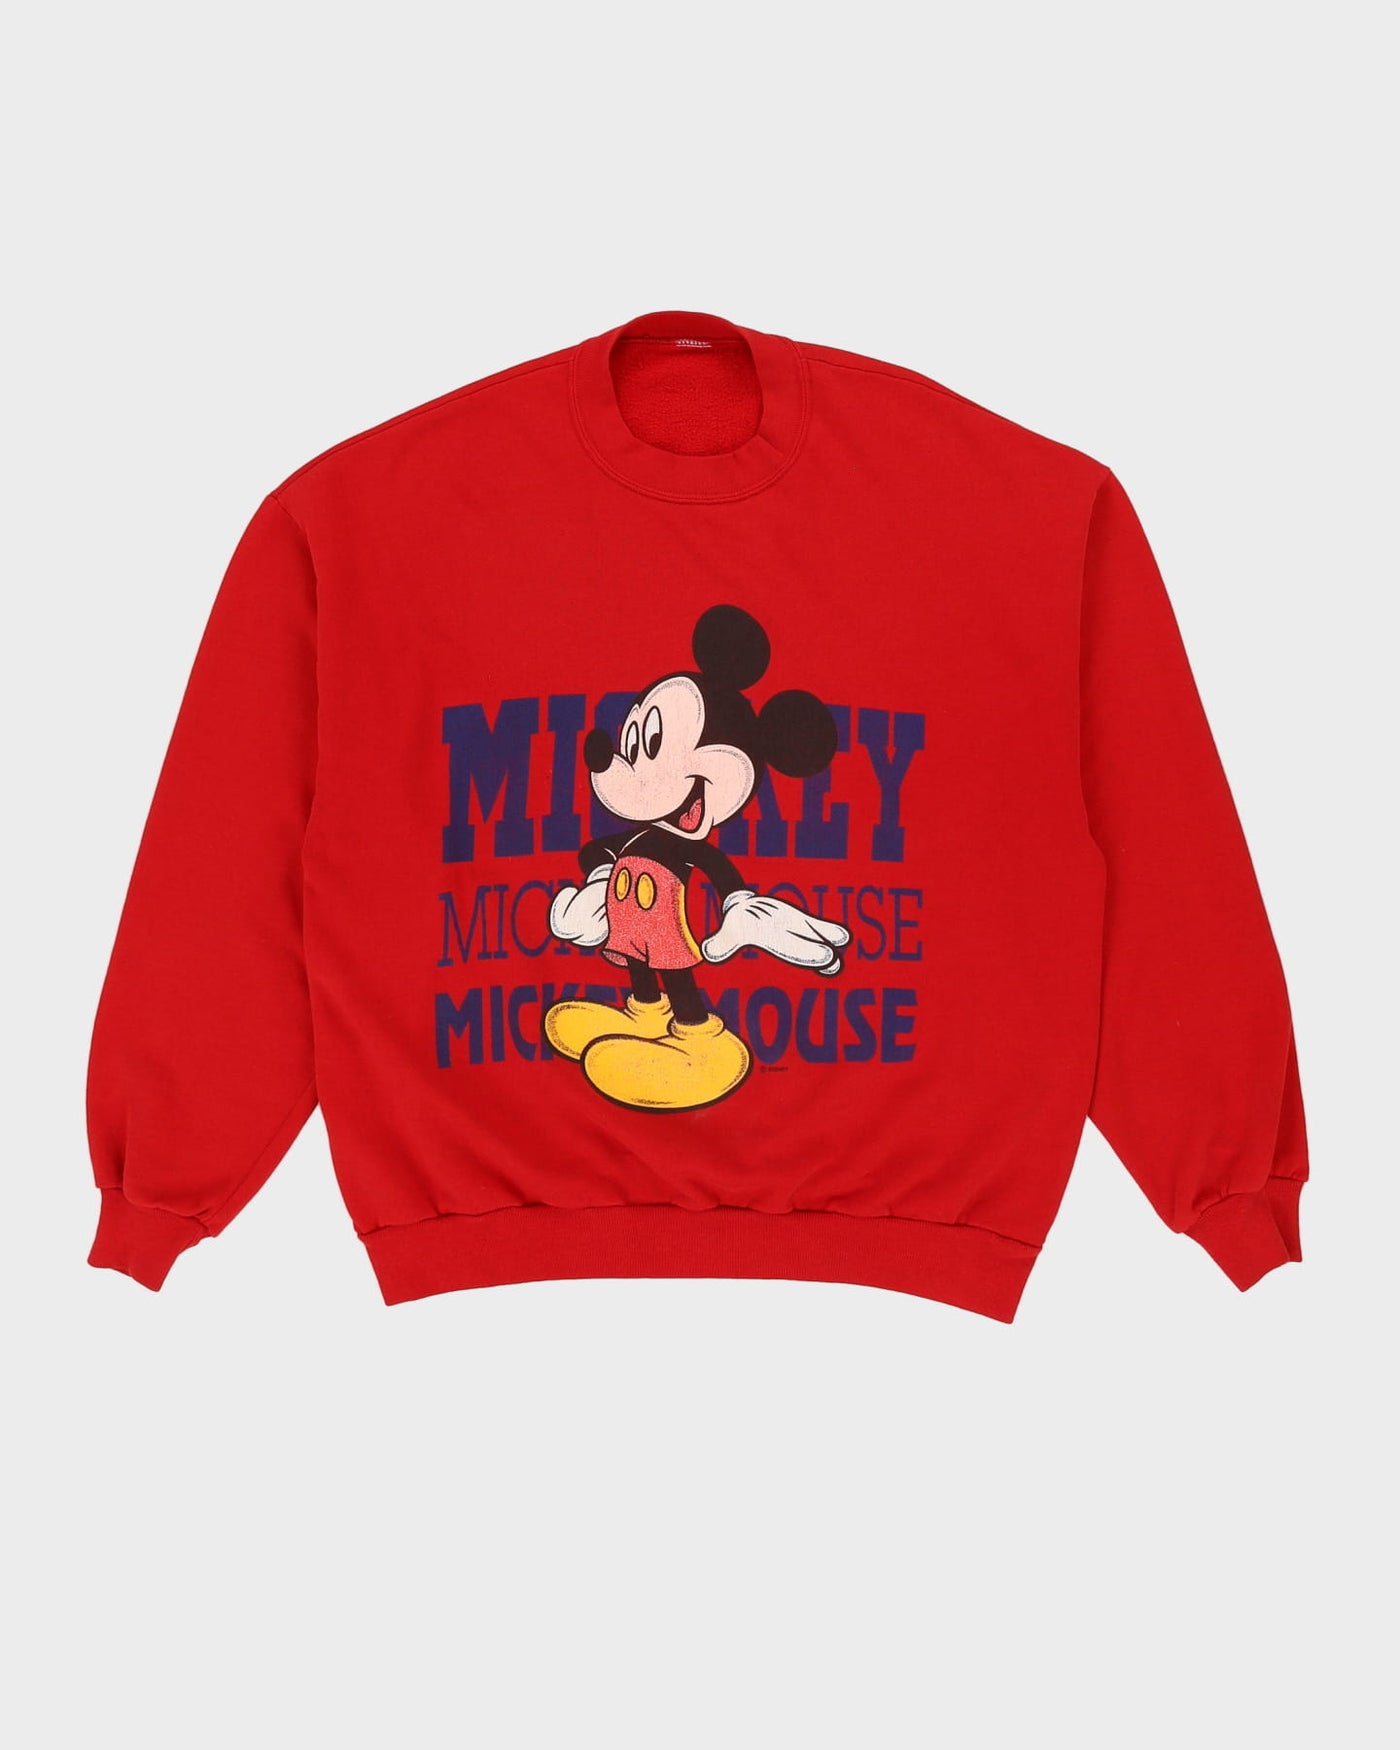 Vintage 90s Disney Mickey Mouse Red Sweatshirt - XL